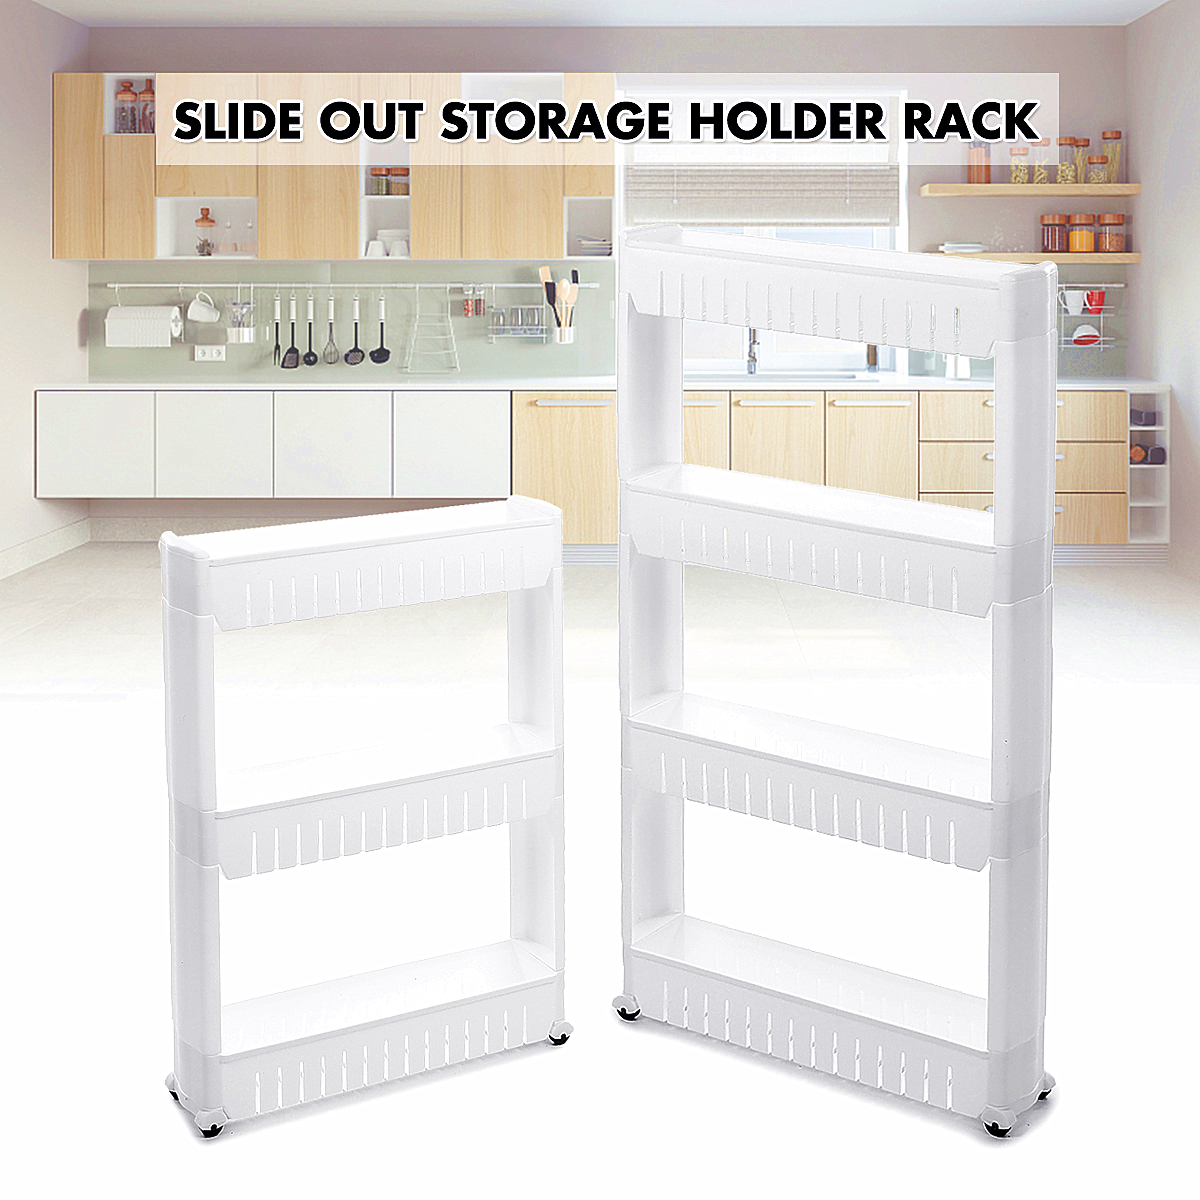 345-Tier-Slim-Slide-Out-Trolley-Storage-Holder-Rack-Organiser-Kitchen-Bathroom-1696979-4